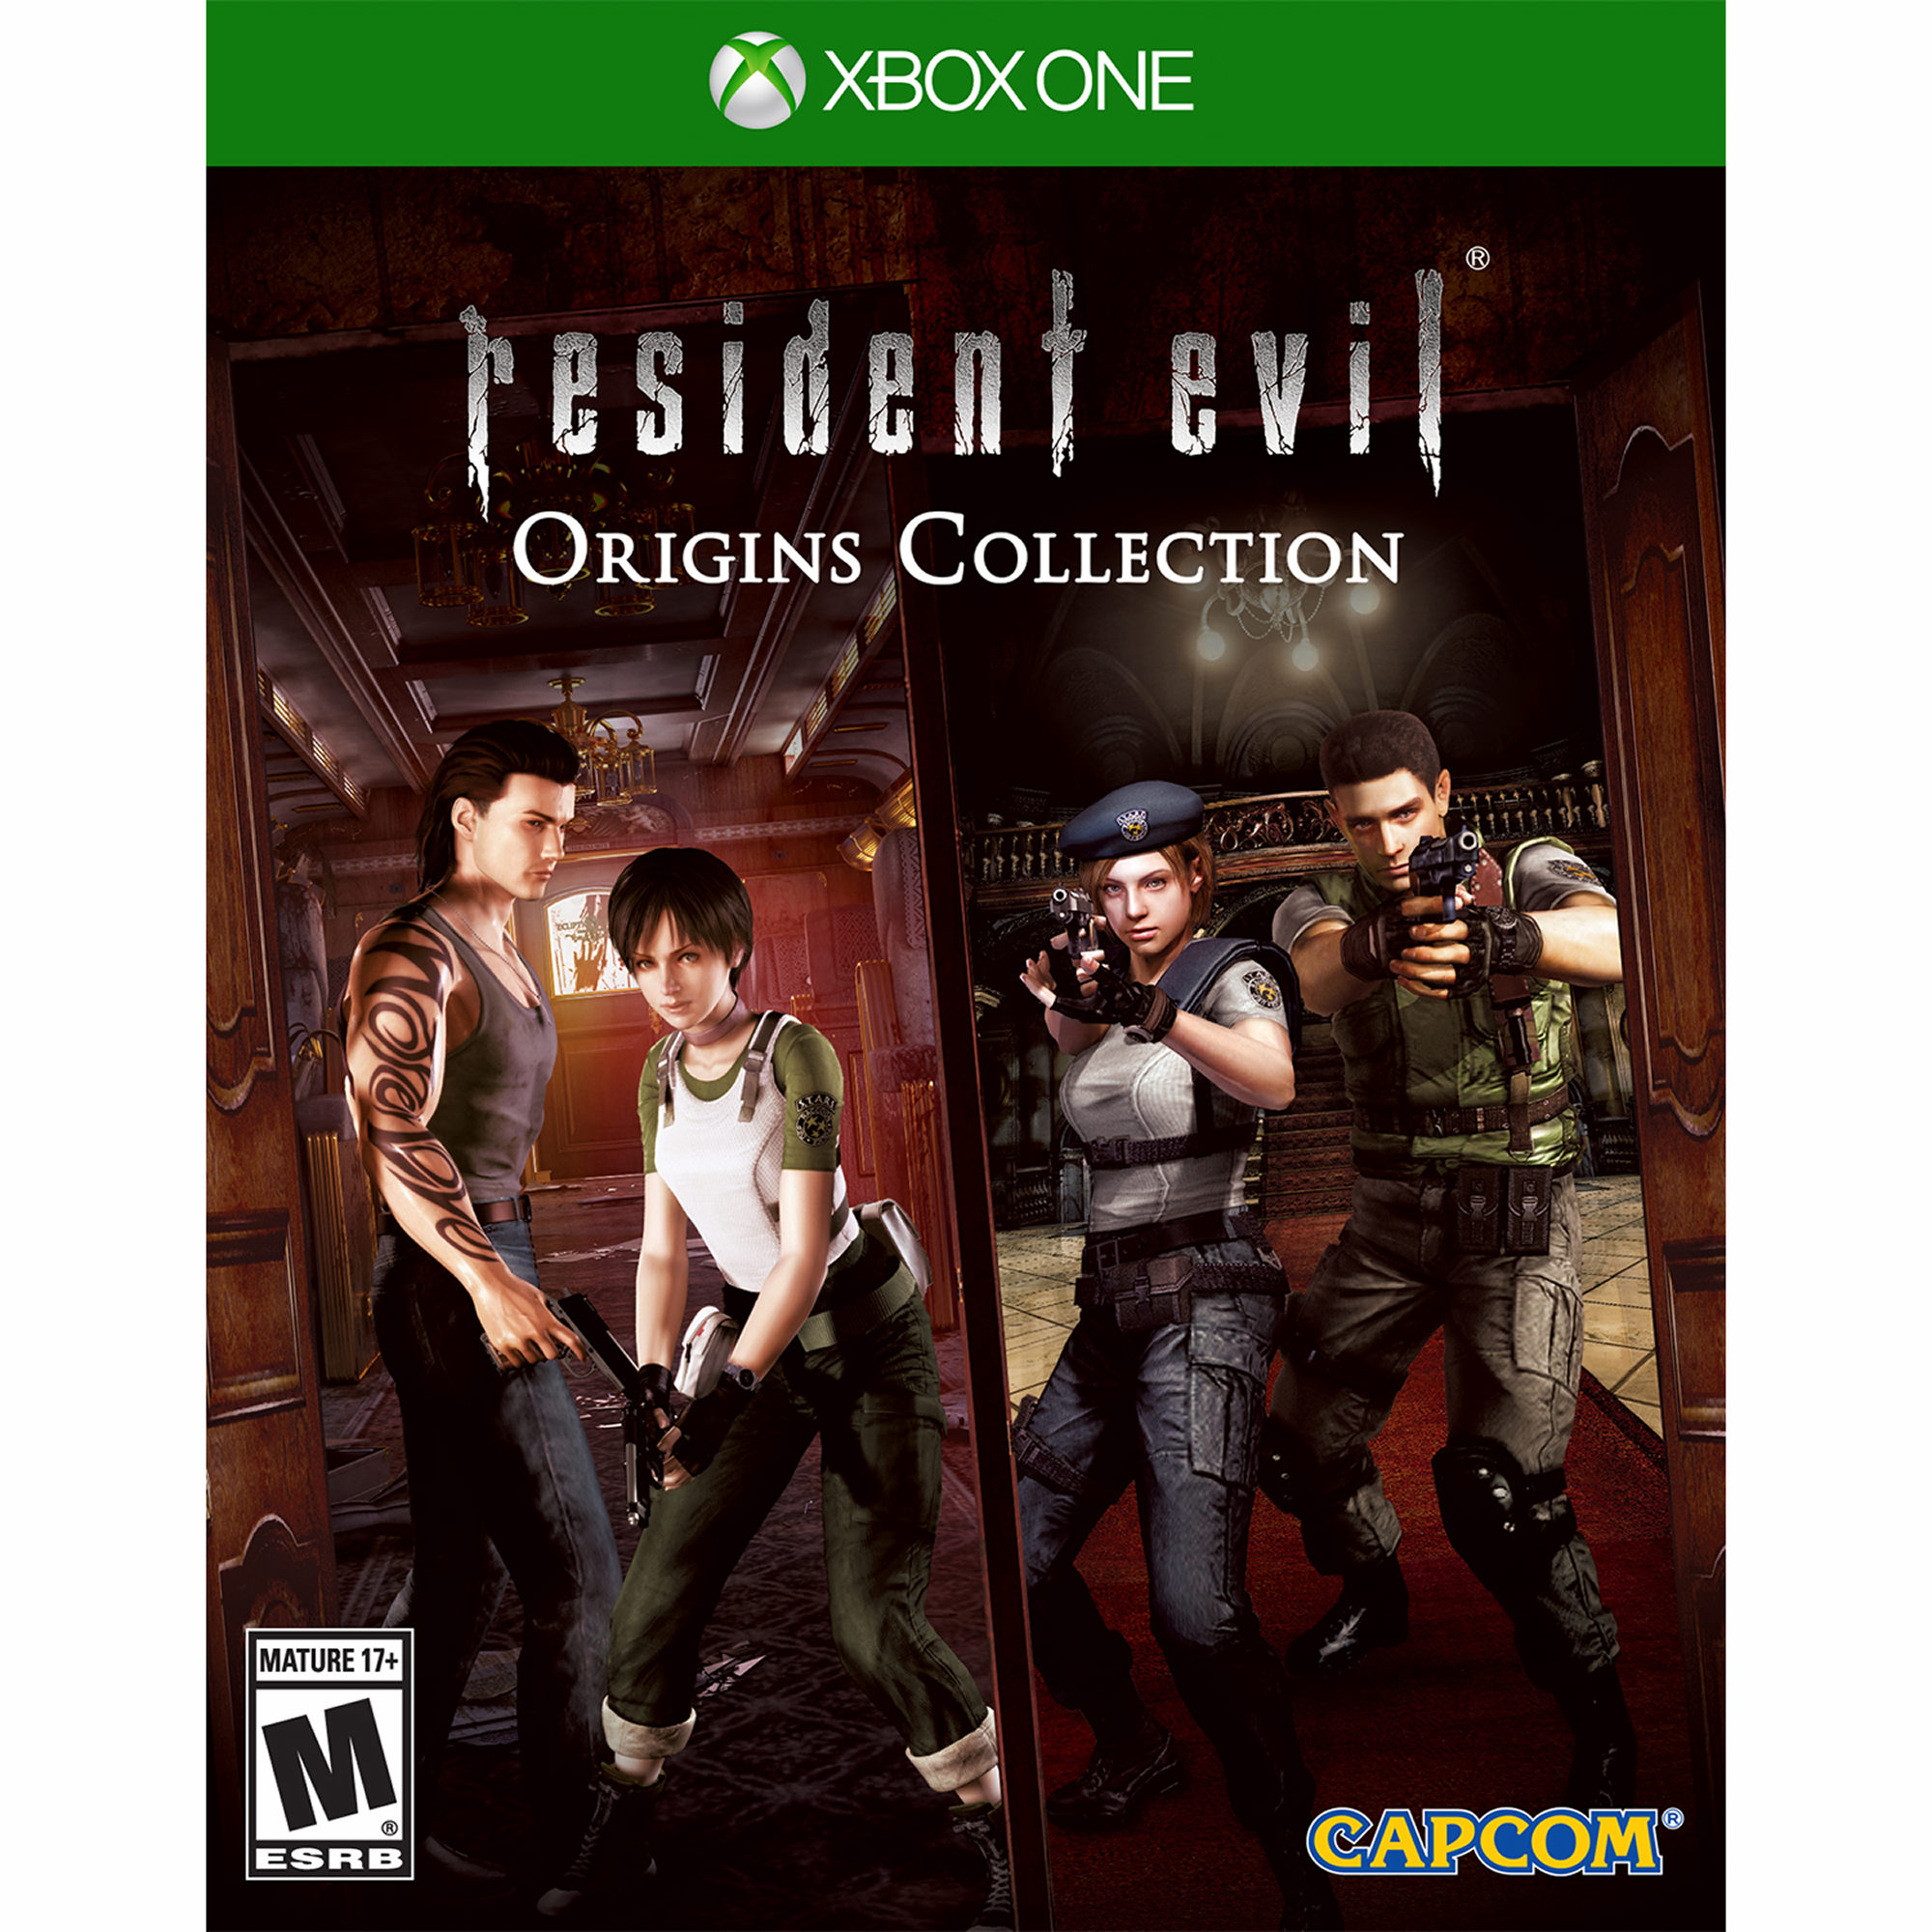 Resident Evil Origins Collection [Xbox One, английская версия]